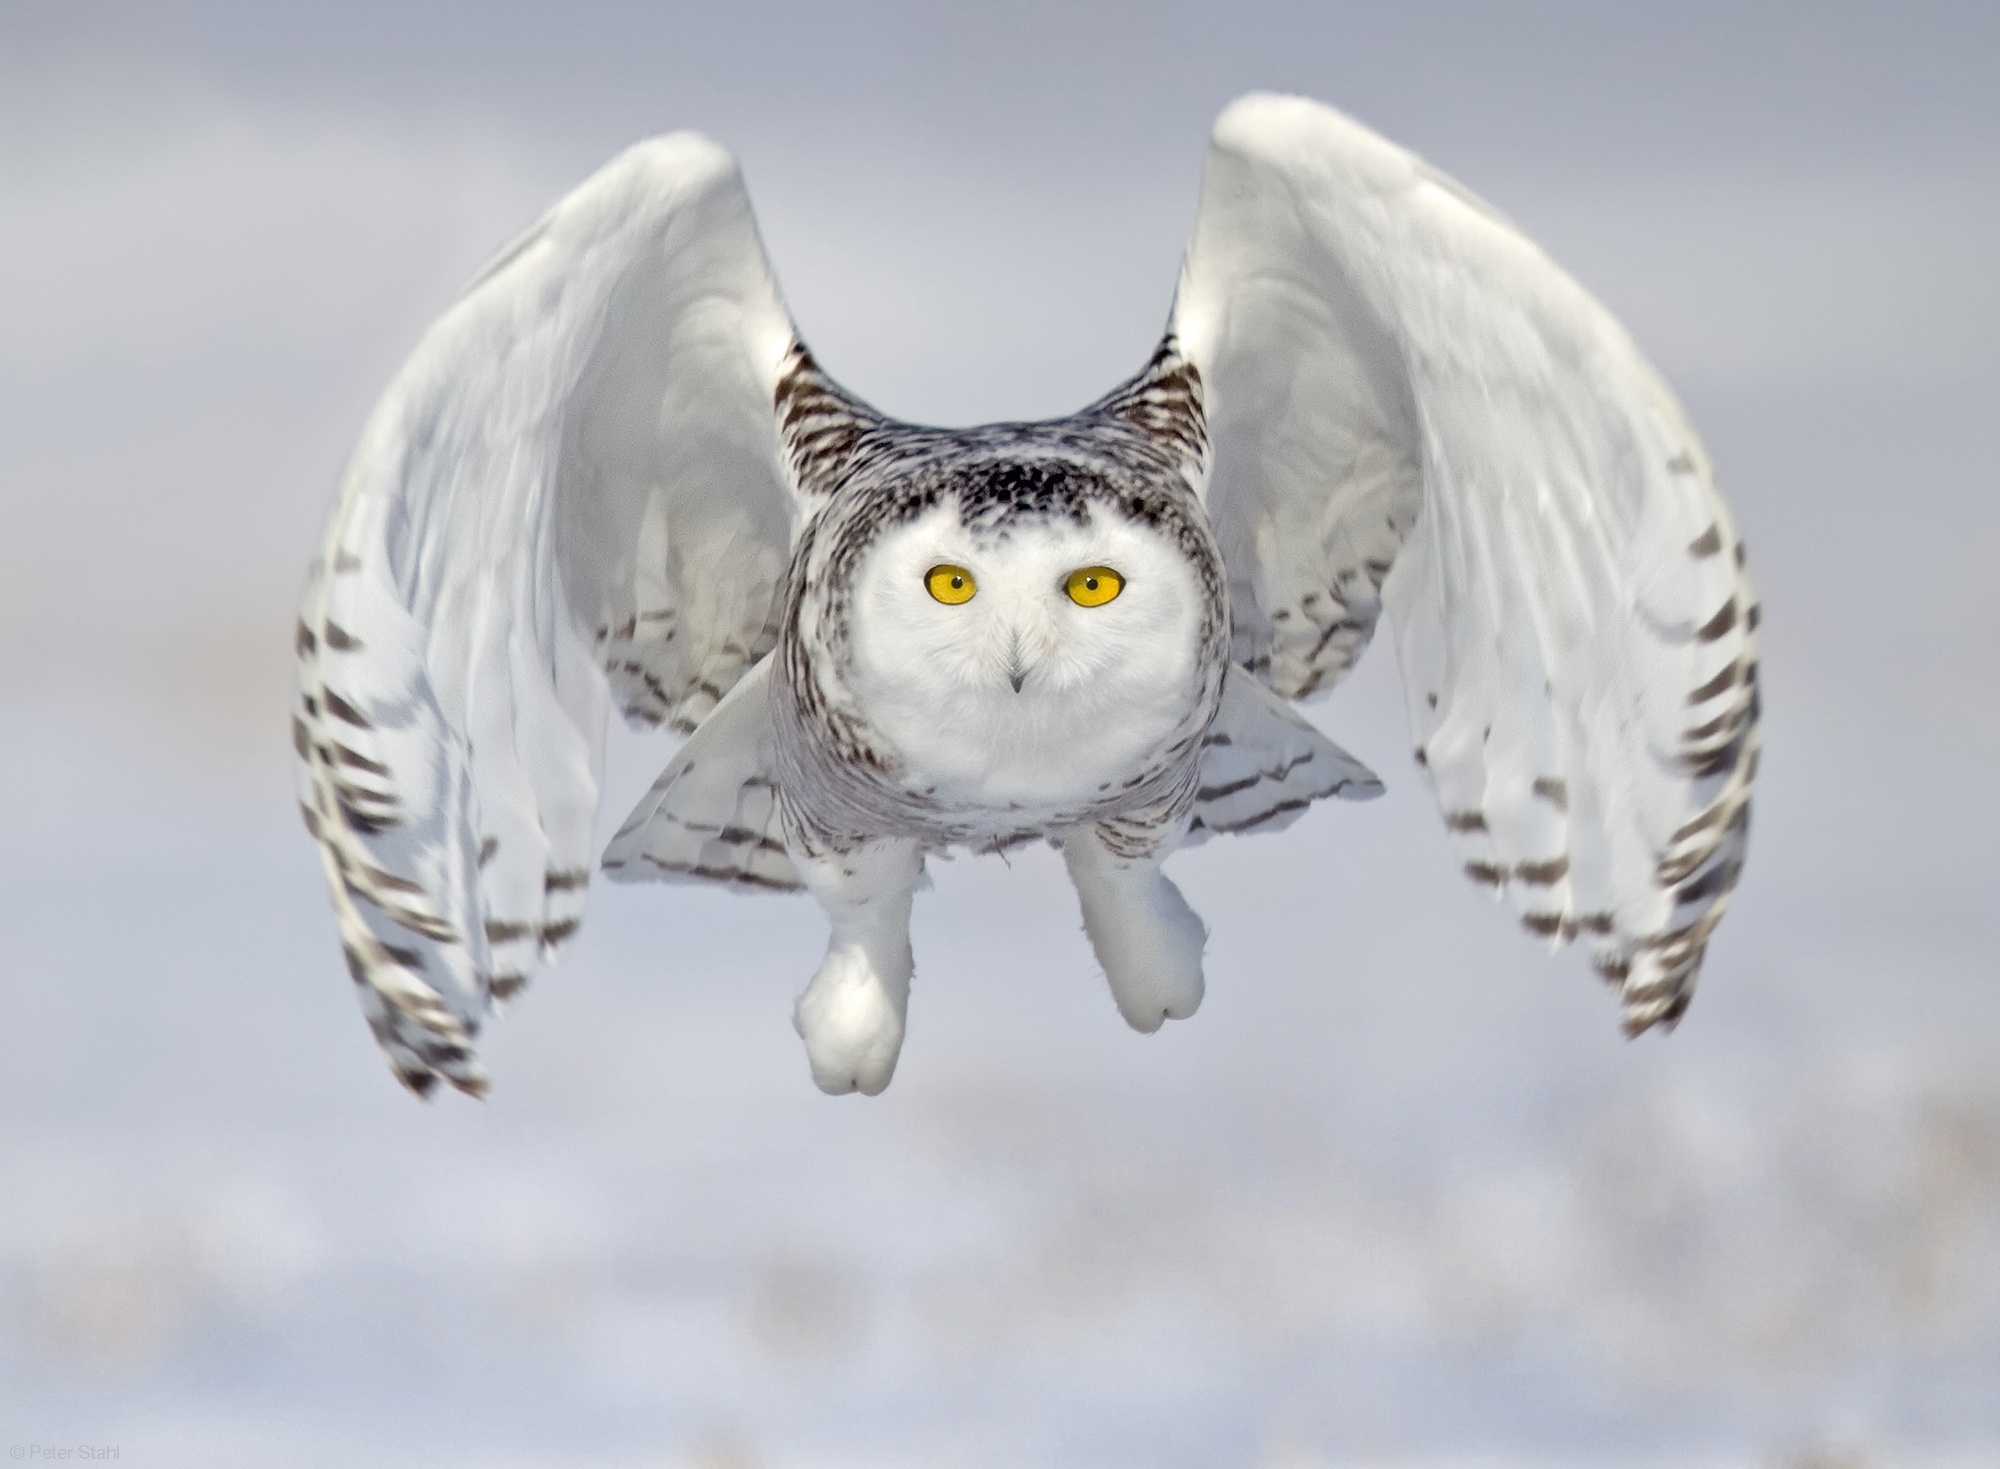 Snowy Owl Flying Up - HD Wallpaper 